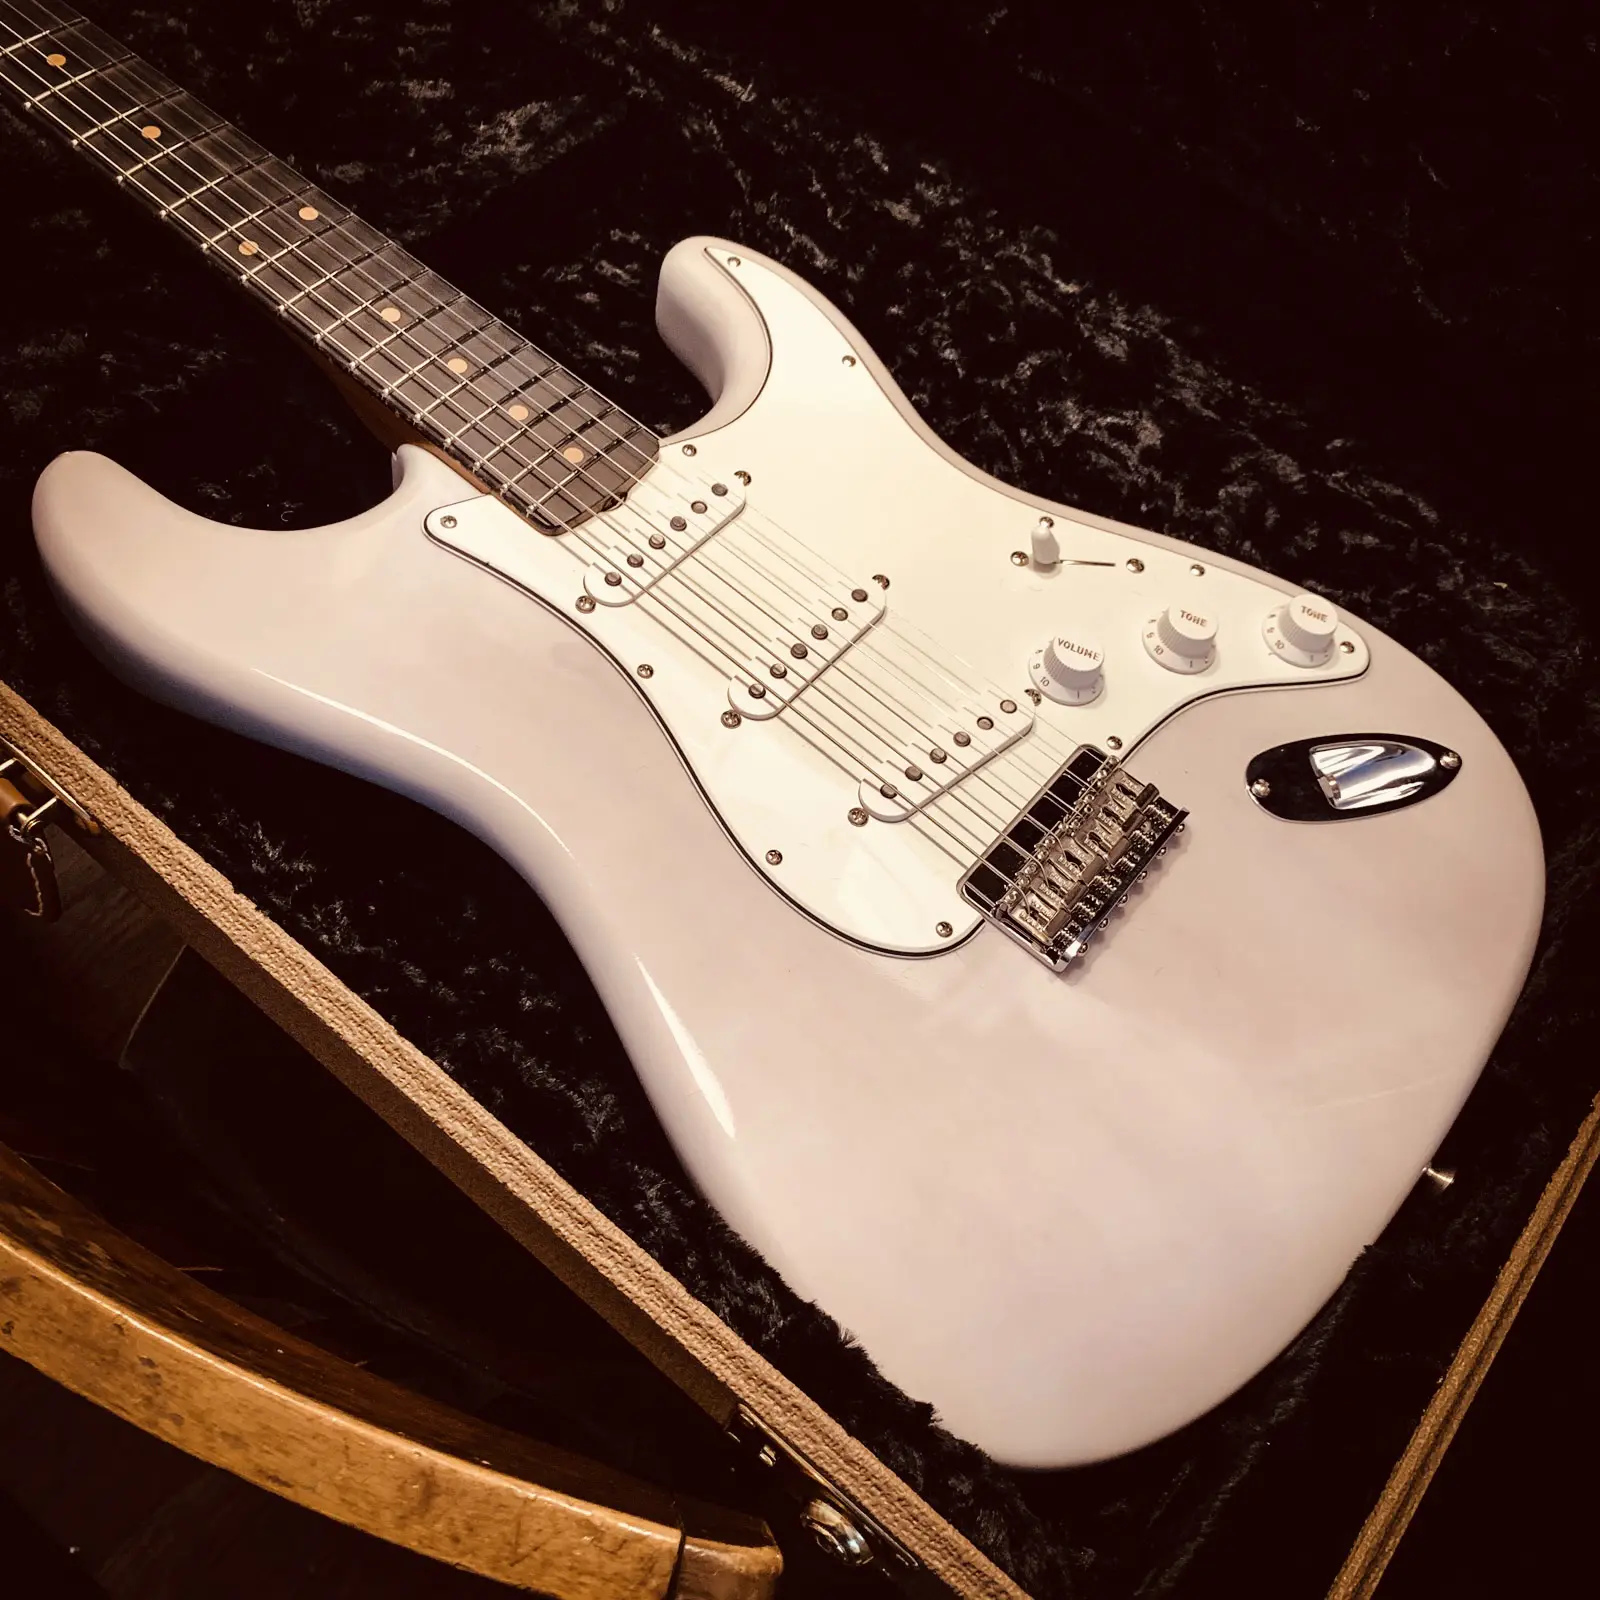 Seans Fender Custom Shop Stratocaster